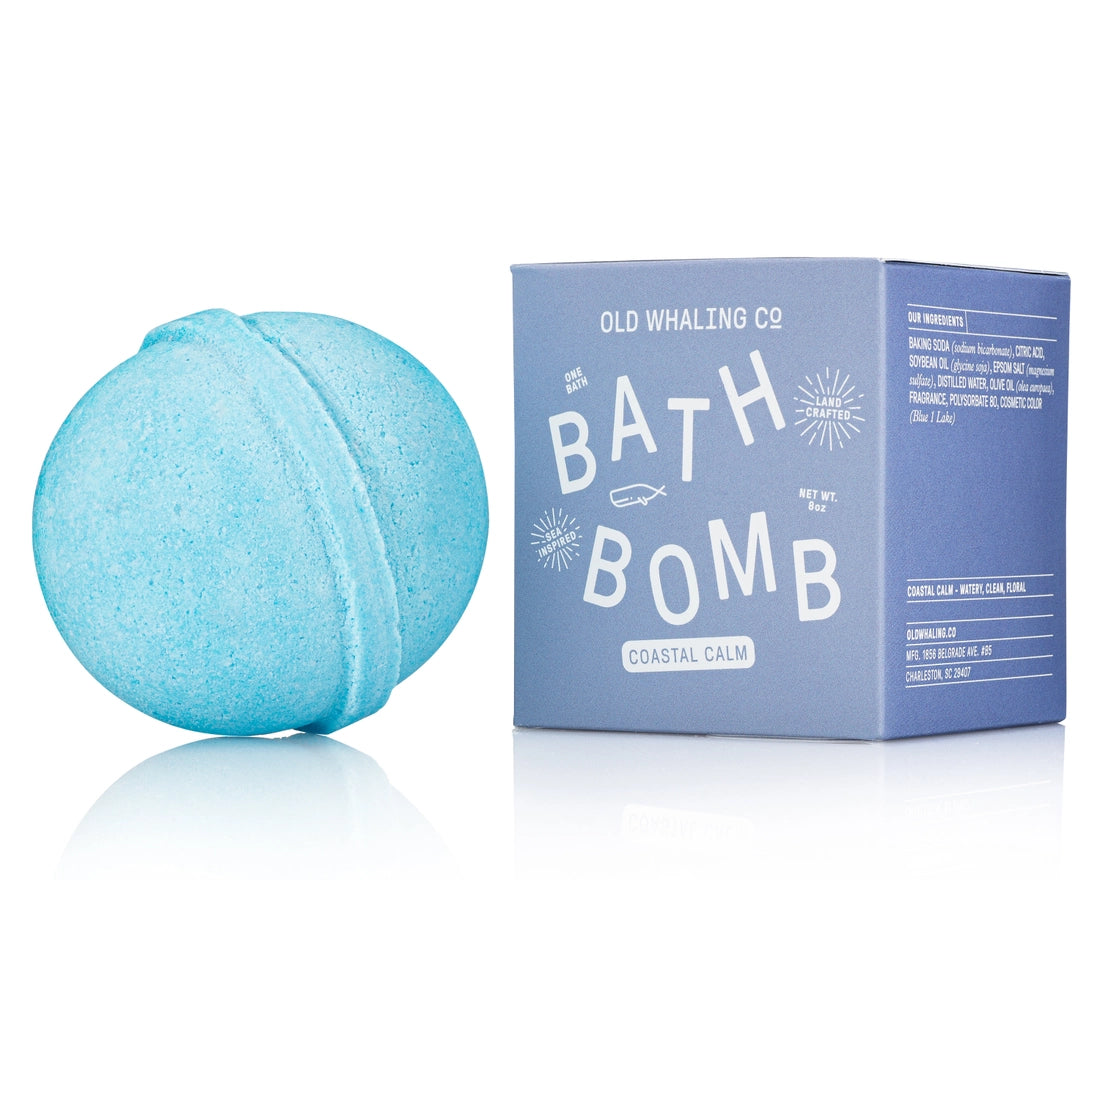 Costal Calm Bath Bomb